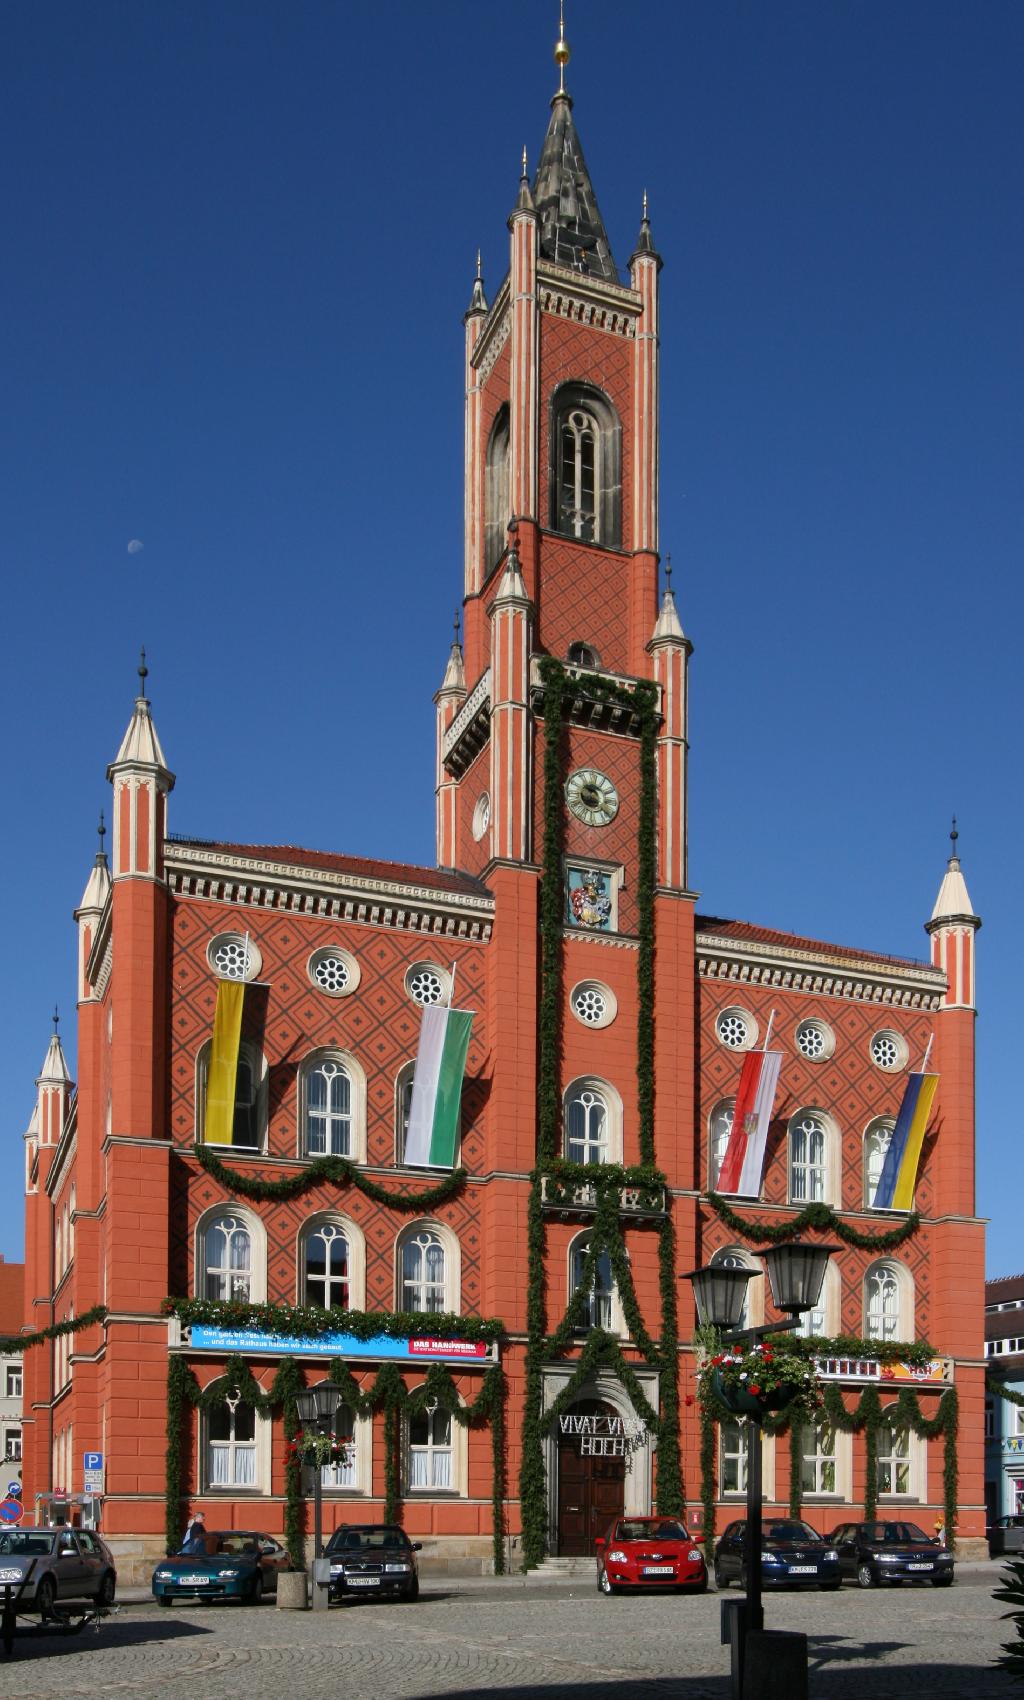 Rathaus Kamenz in Kamenz/Kamjenc